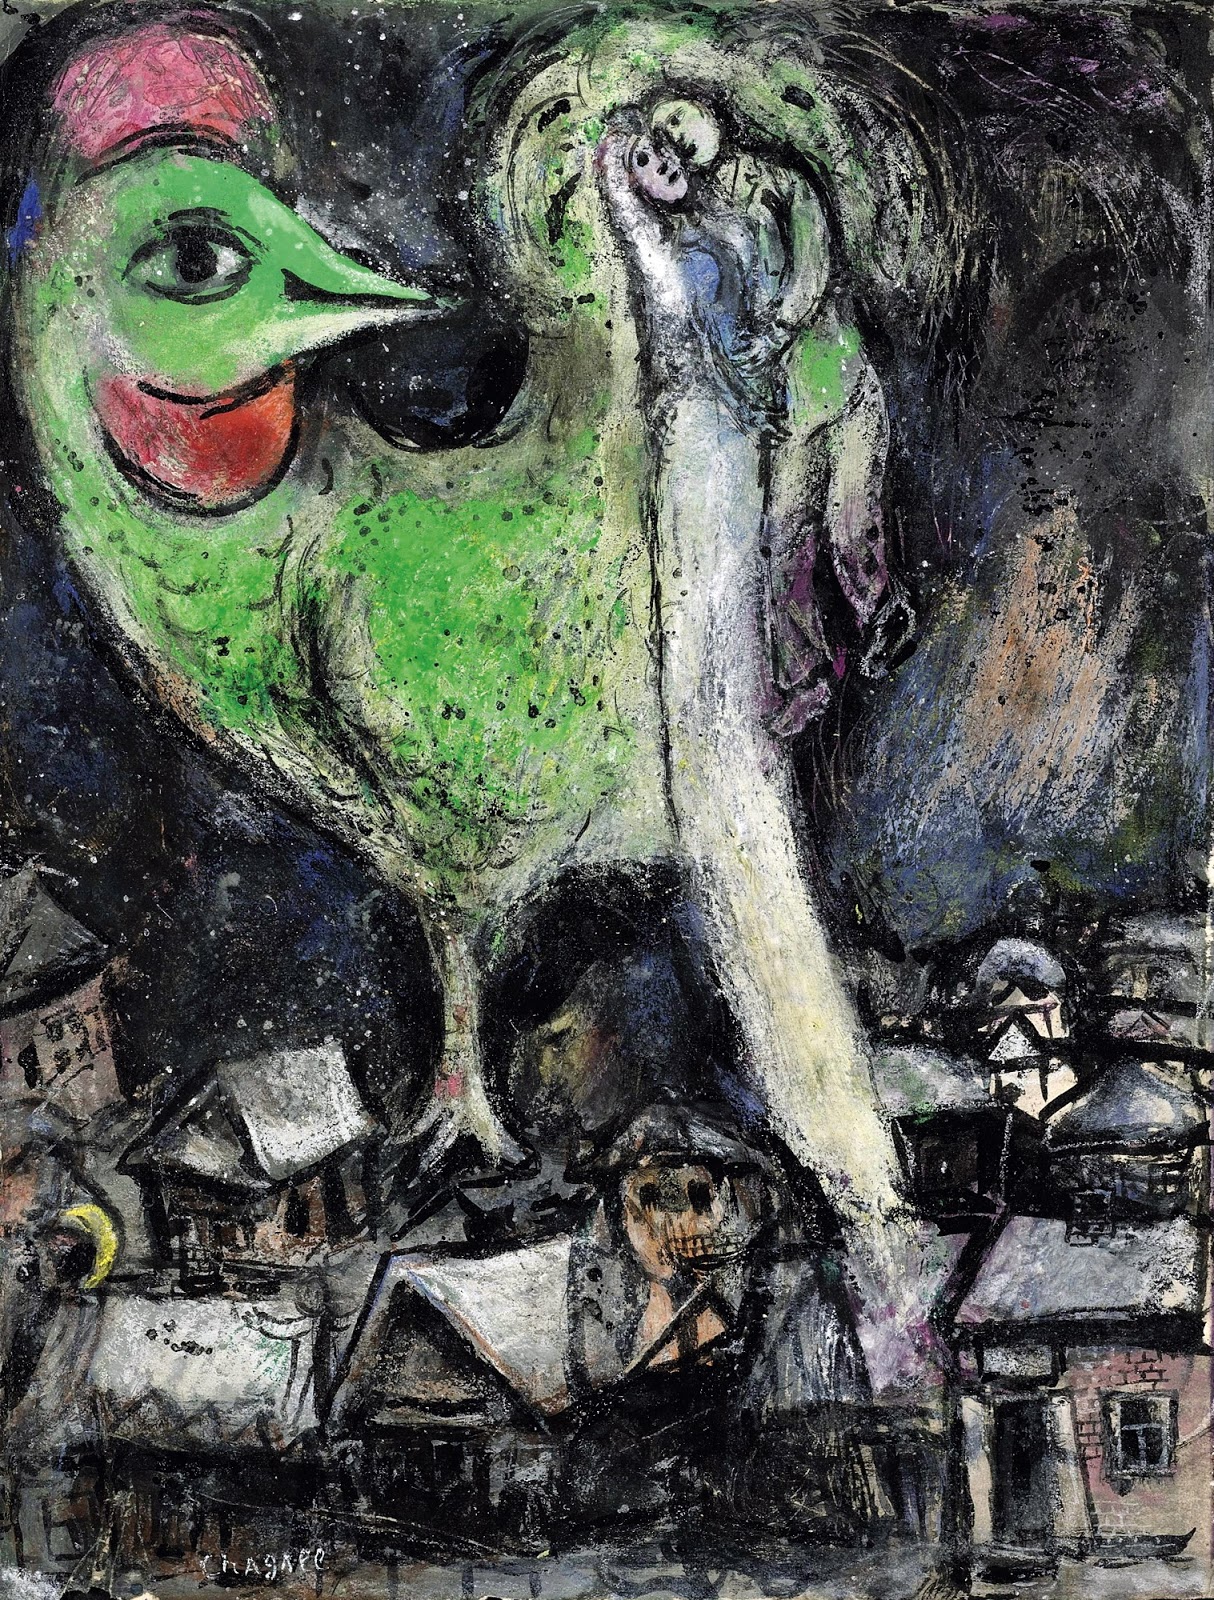 Marc+Chagall-1887-1985 (275).jpg